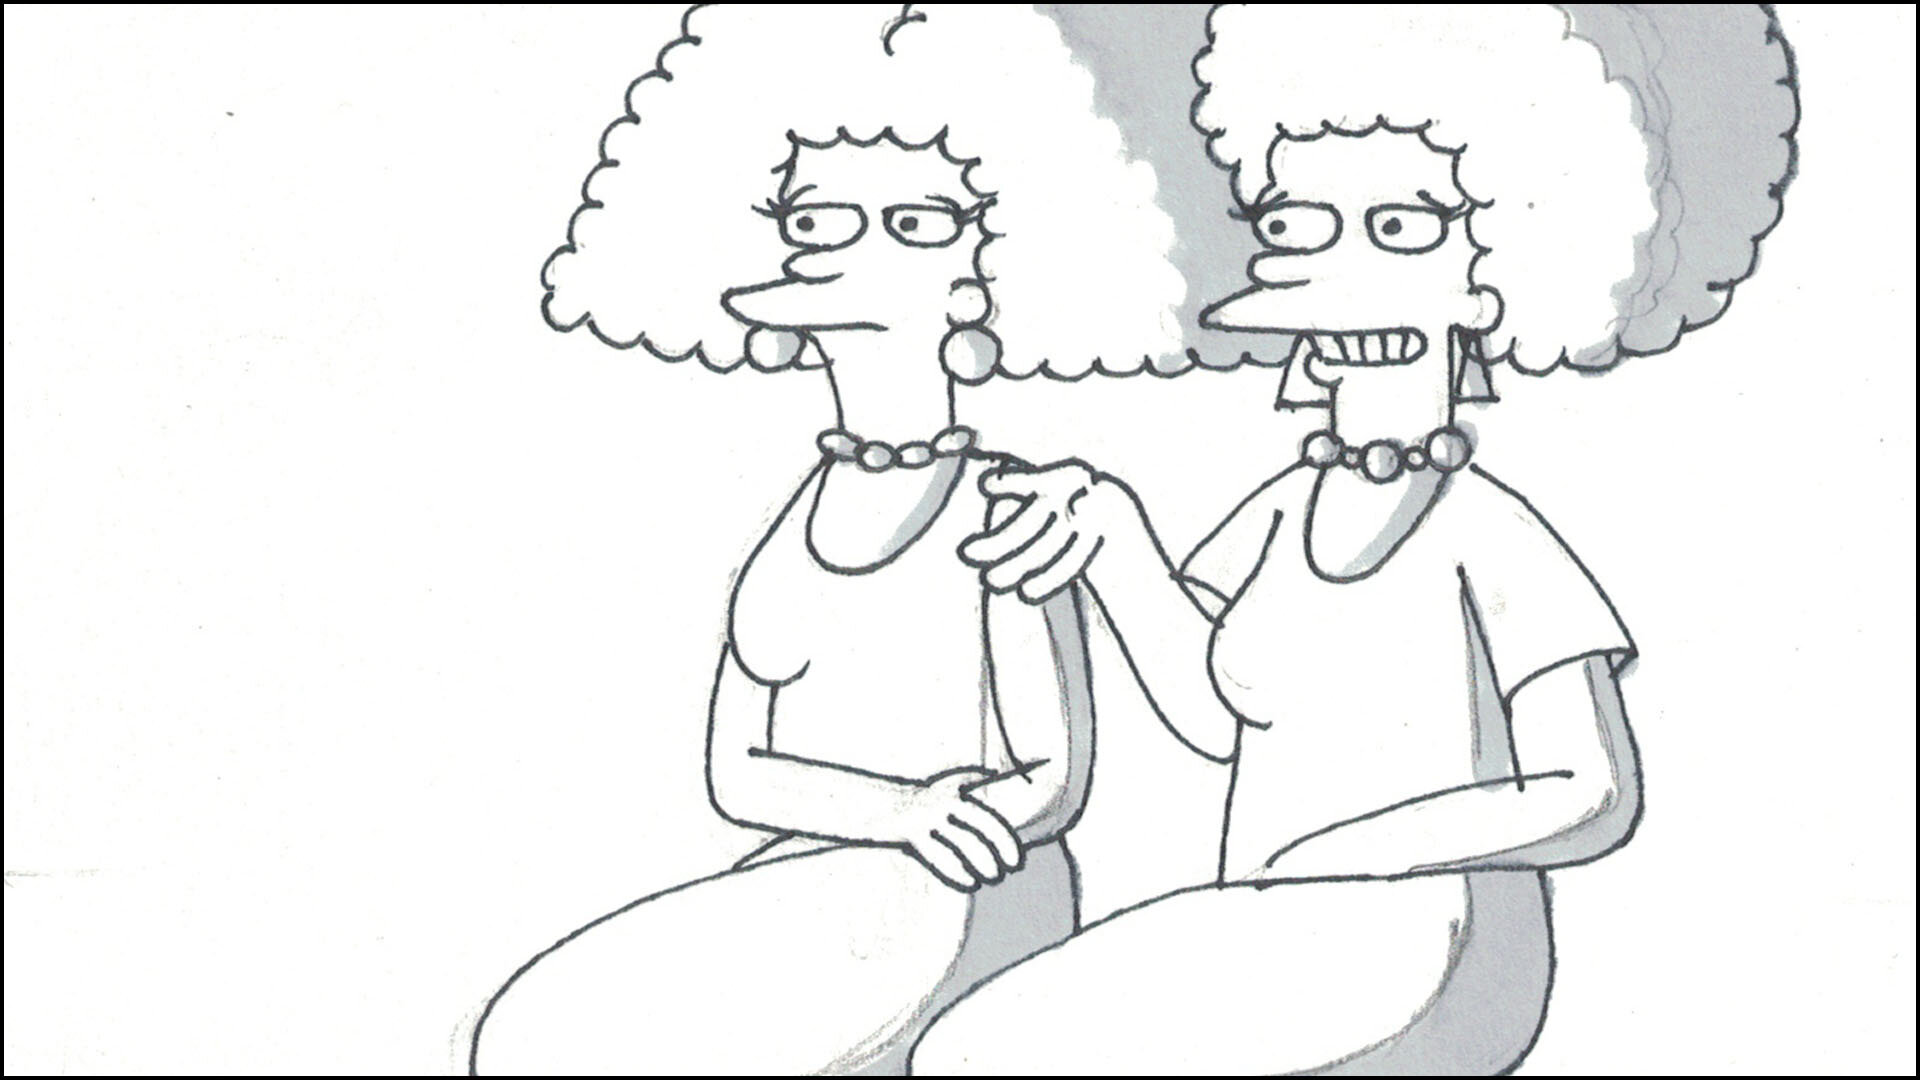 Patty: "We loved to smoke."